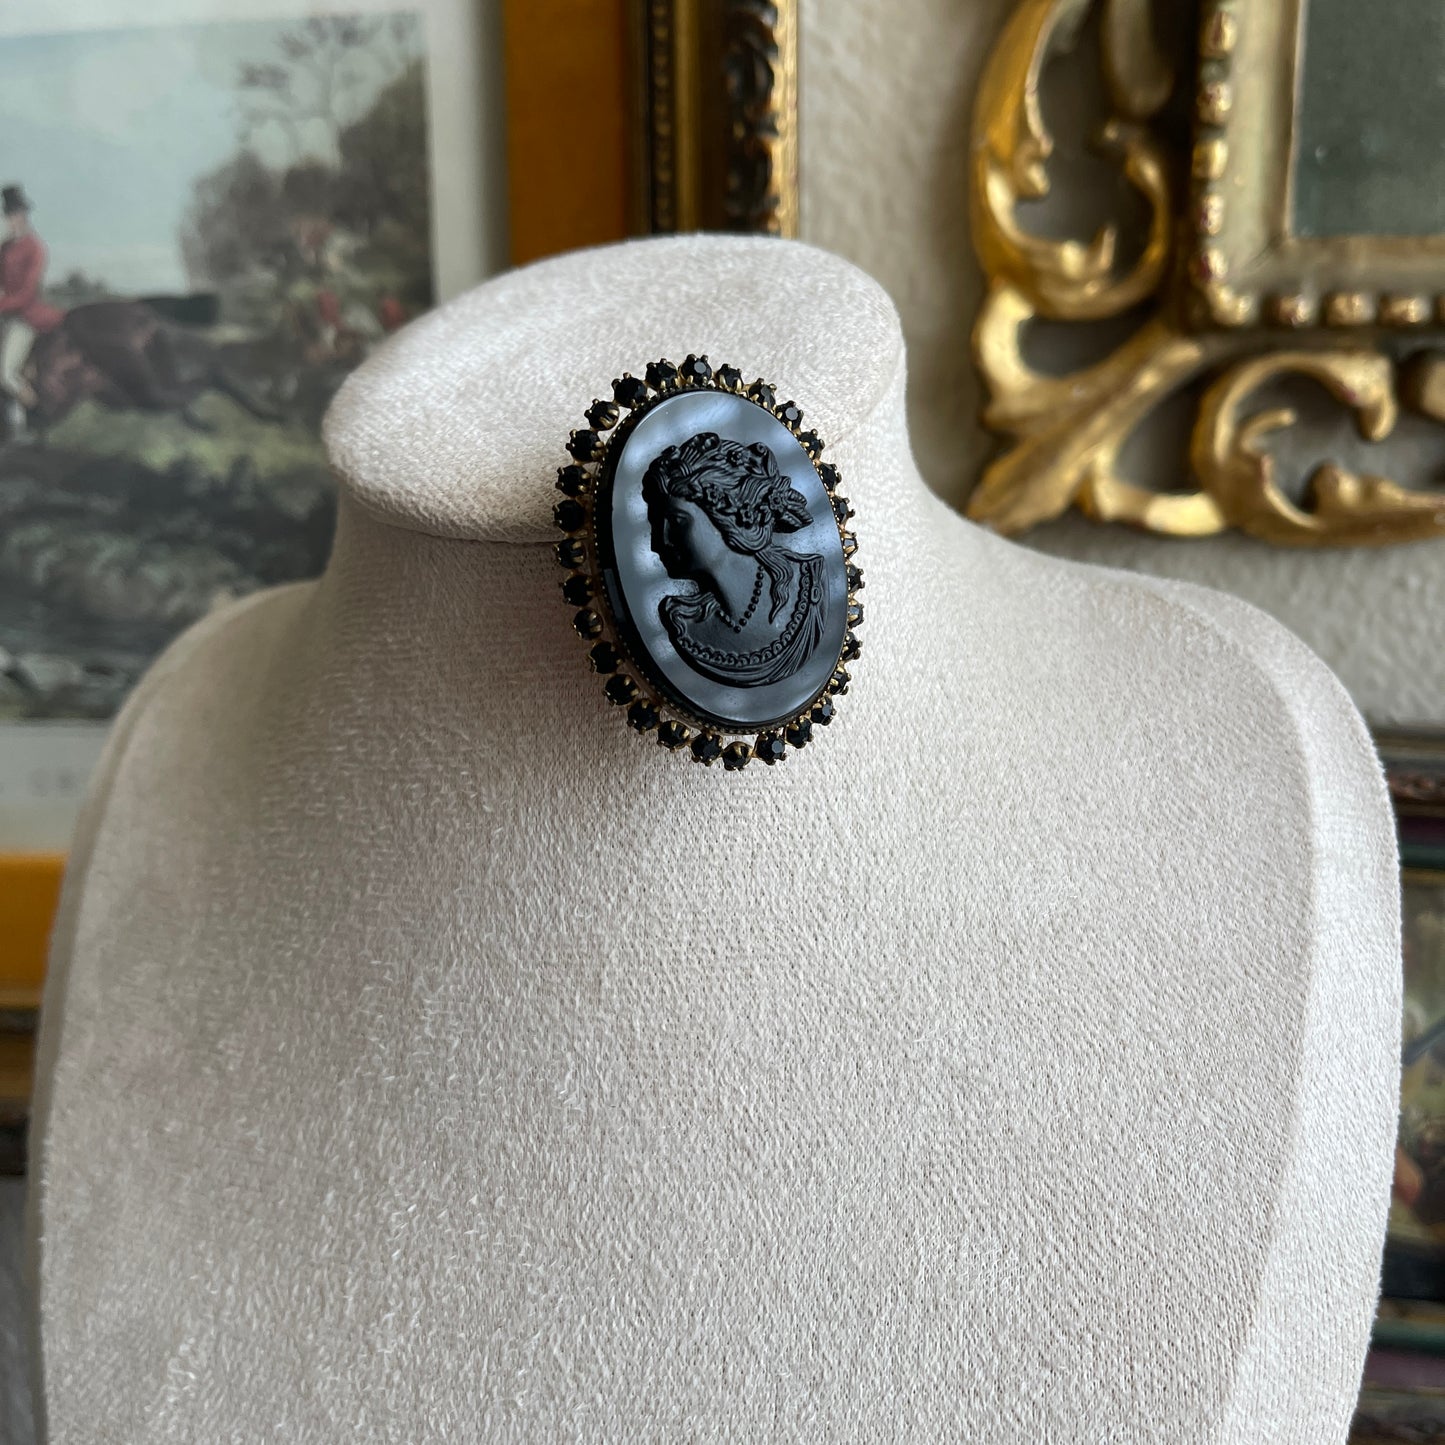 Vintage black glass with rhinestone cameo brooch pendant